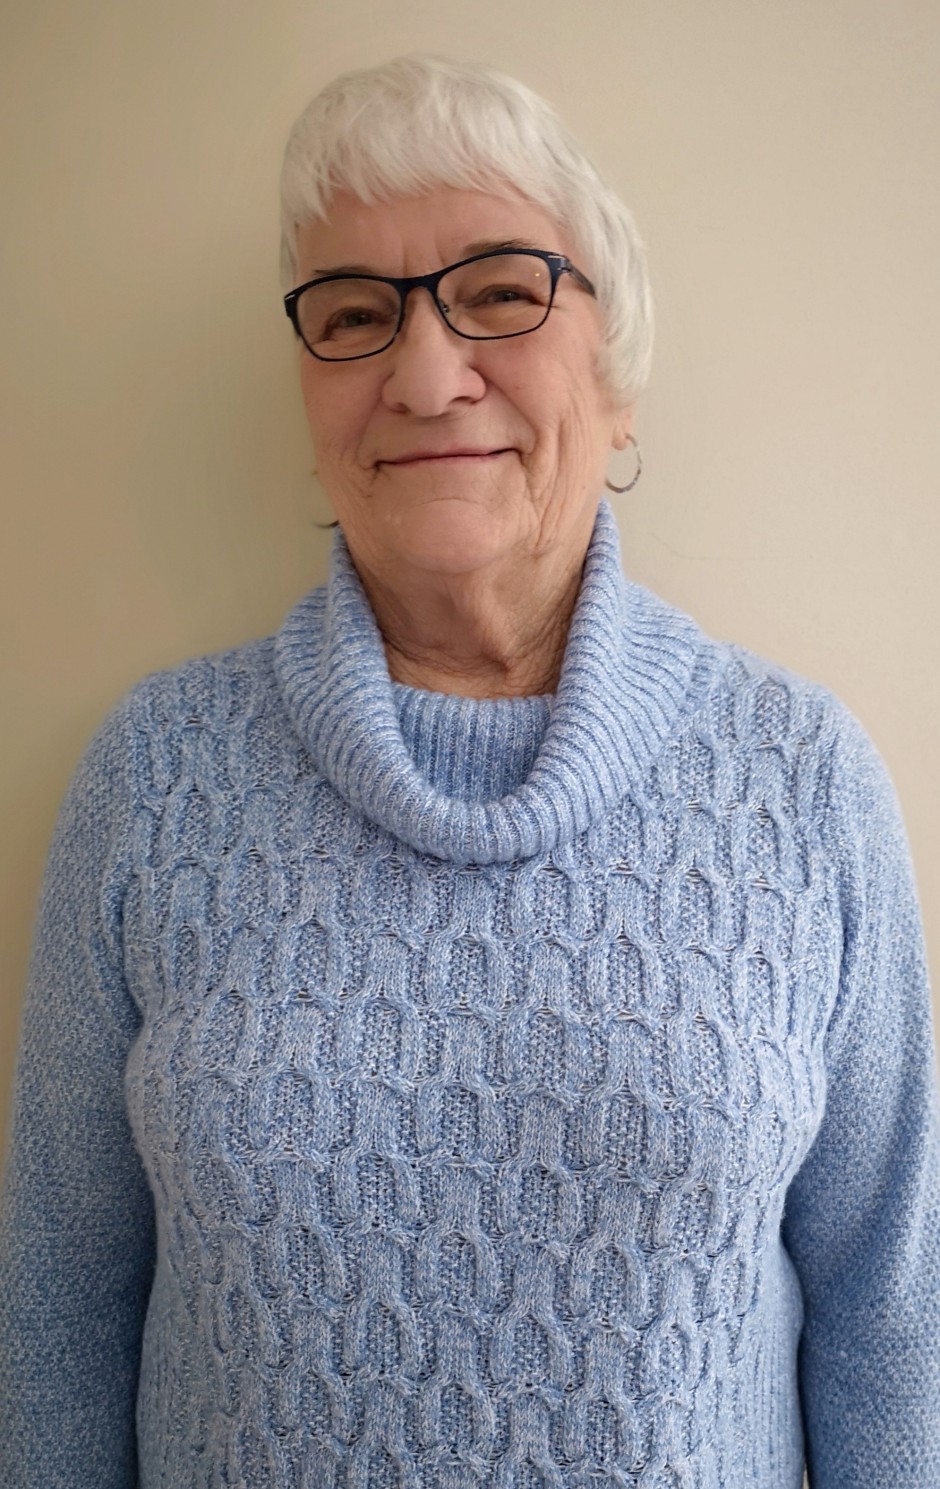 Elderly woman in light blue knit sweater wearing glasses, smiling